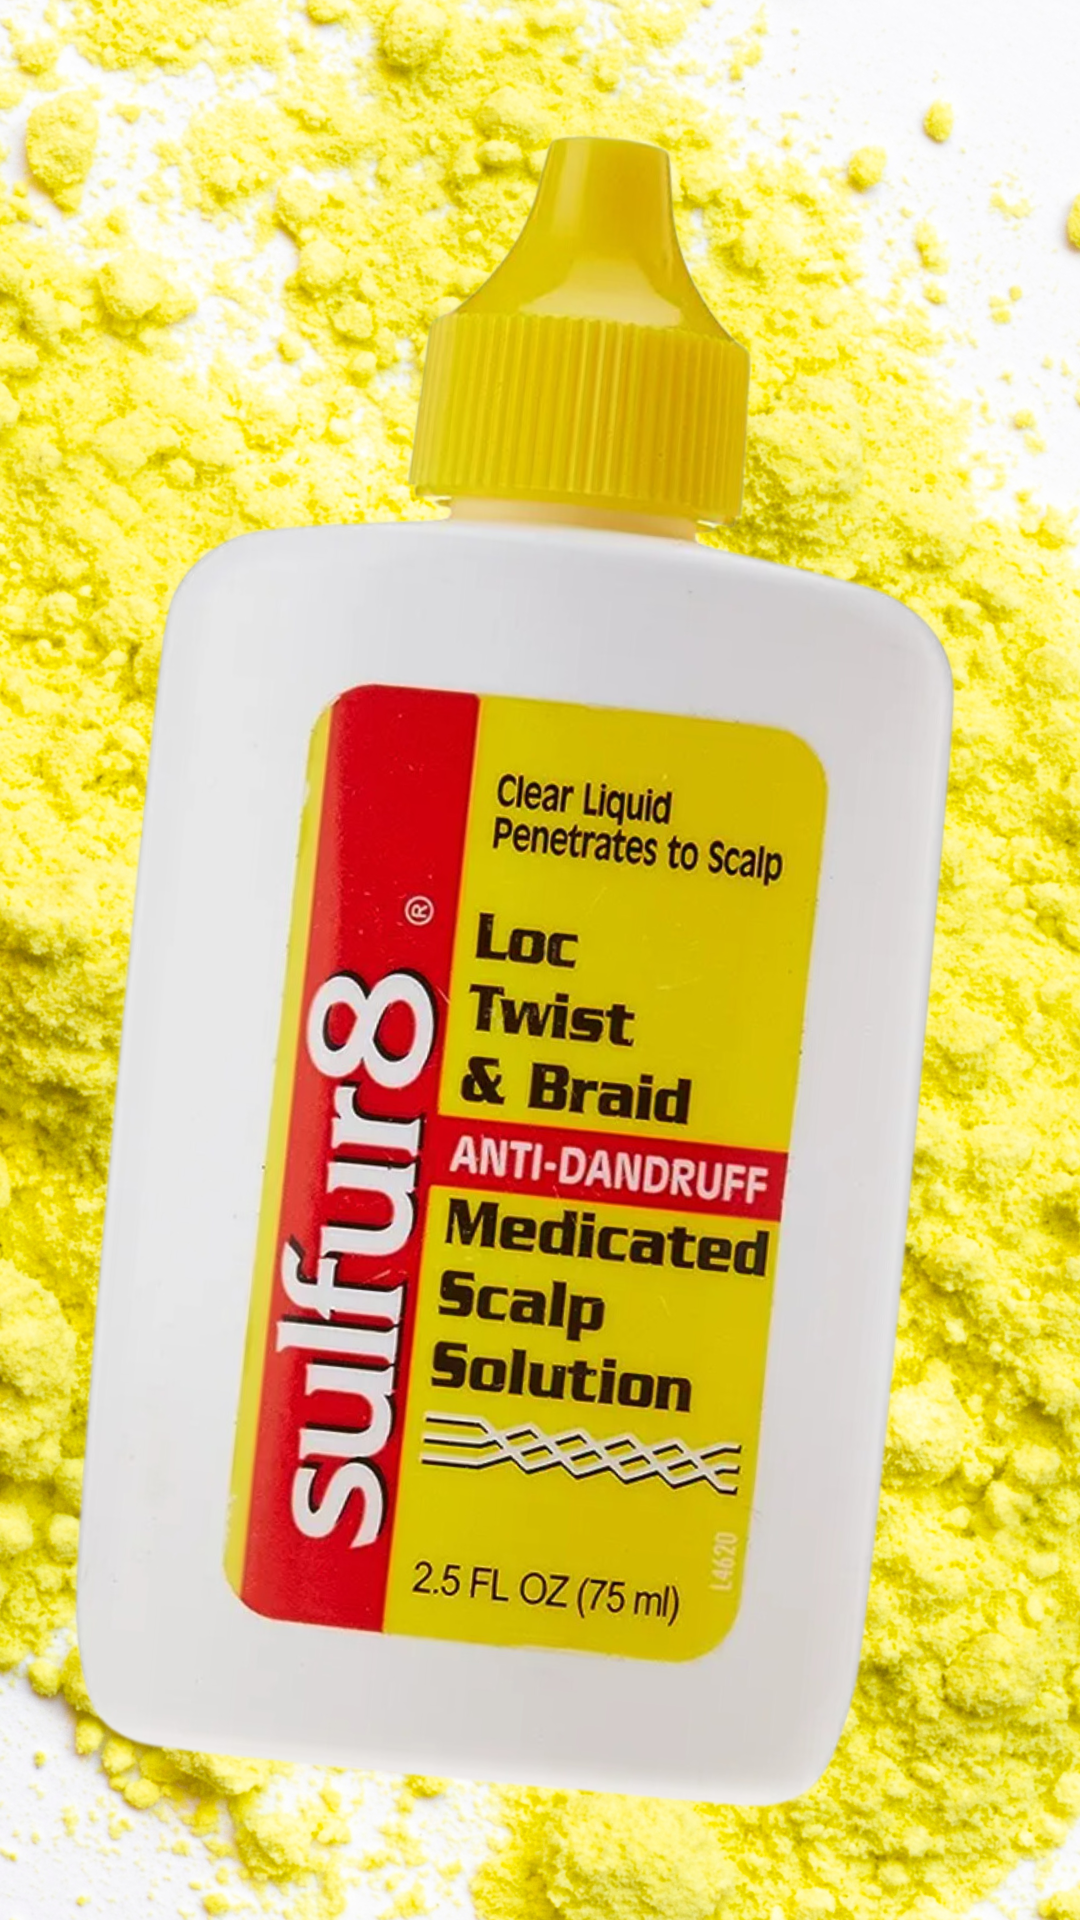 Sulfur 8 Loc Twist & Braid Scalp Solution